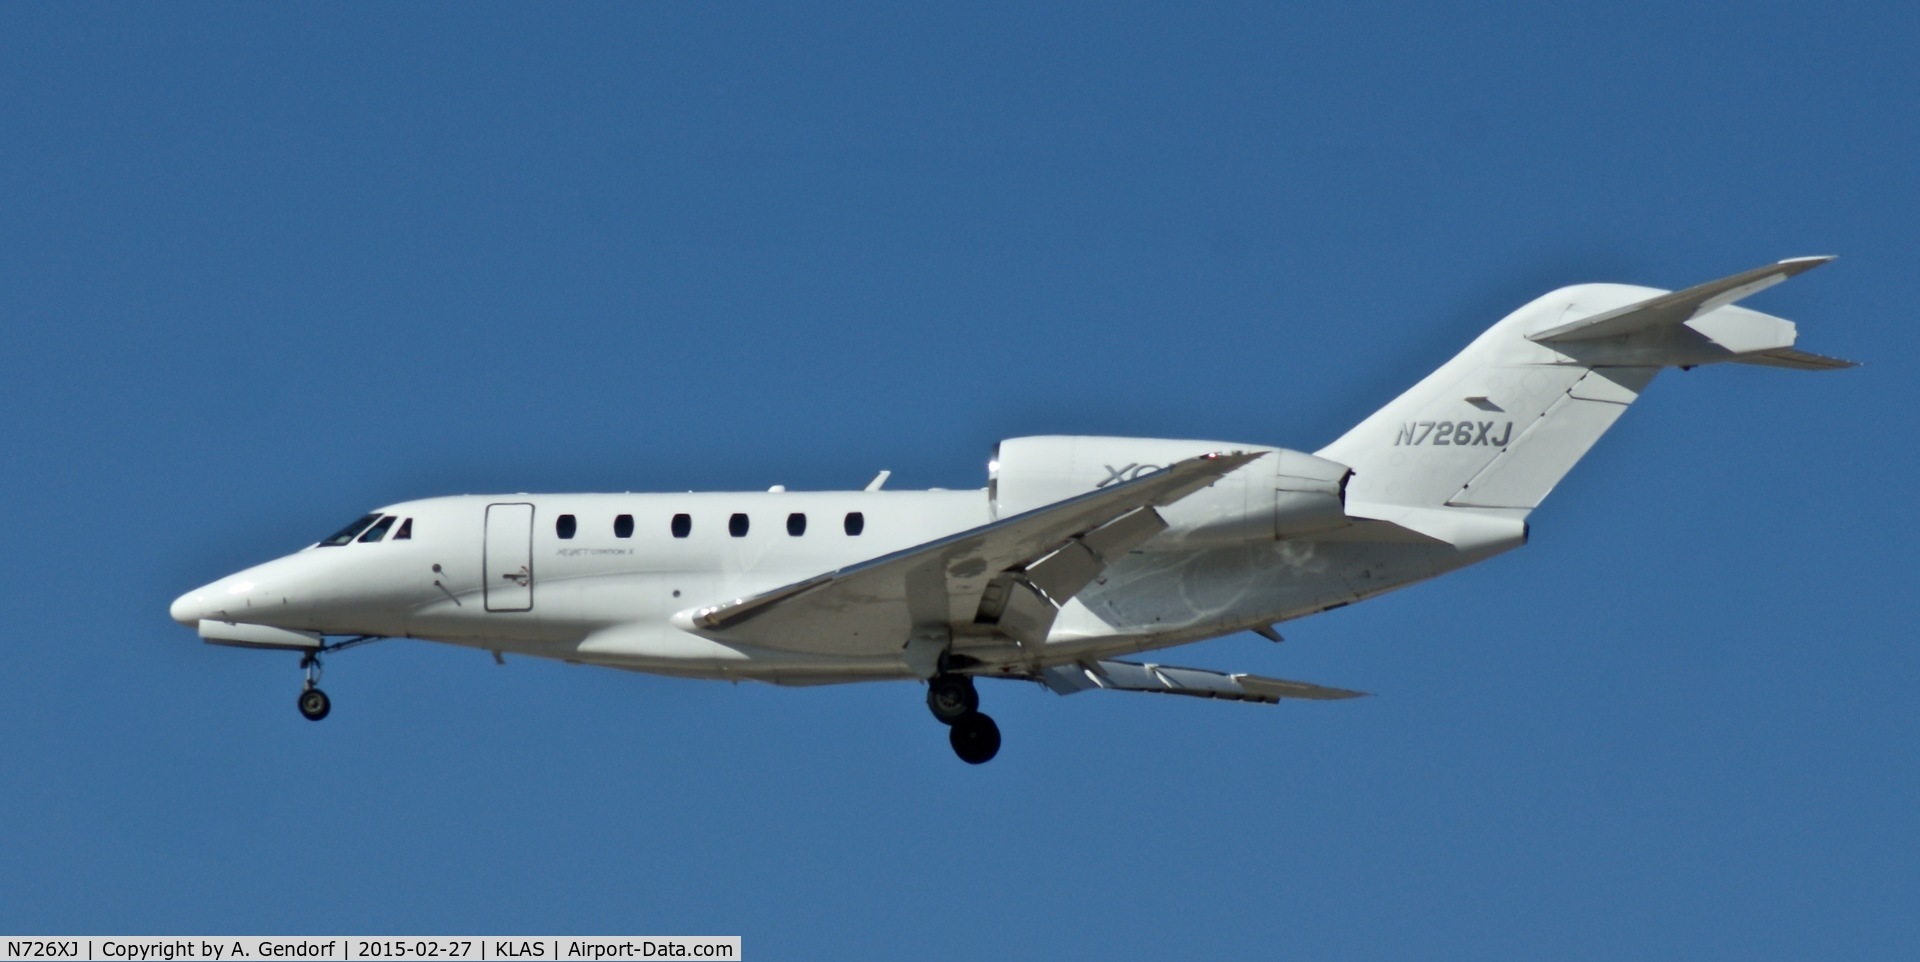 N726XJ, 2004 Cessna 750 Citation X Citation X C/N 750-0226, XOJet (untitled), is here landing at Las Vegas Int'l(KLAS)